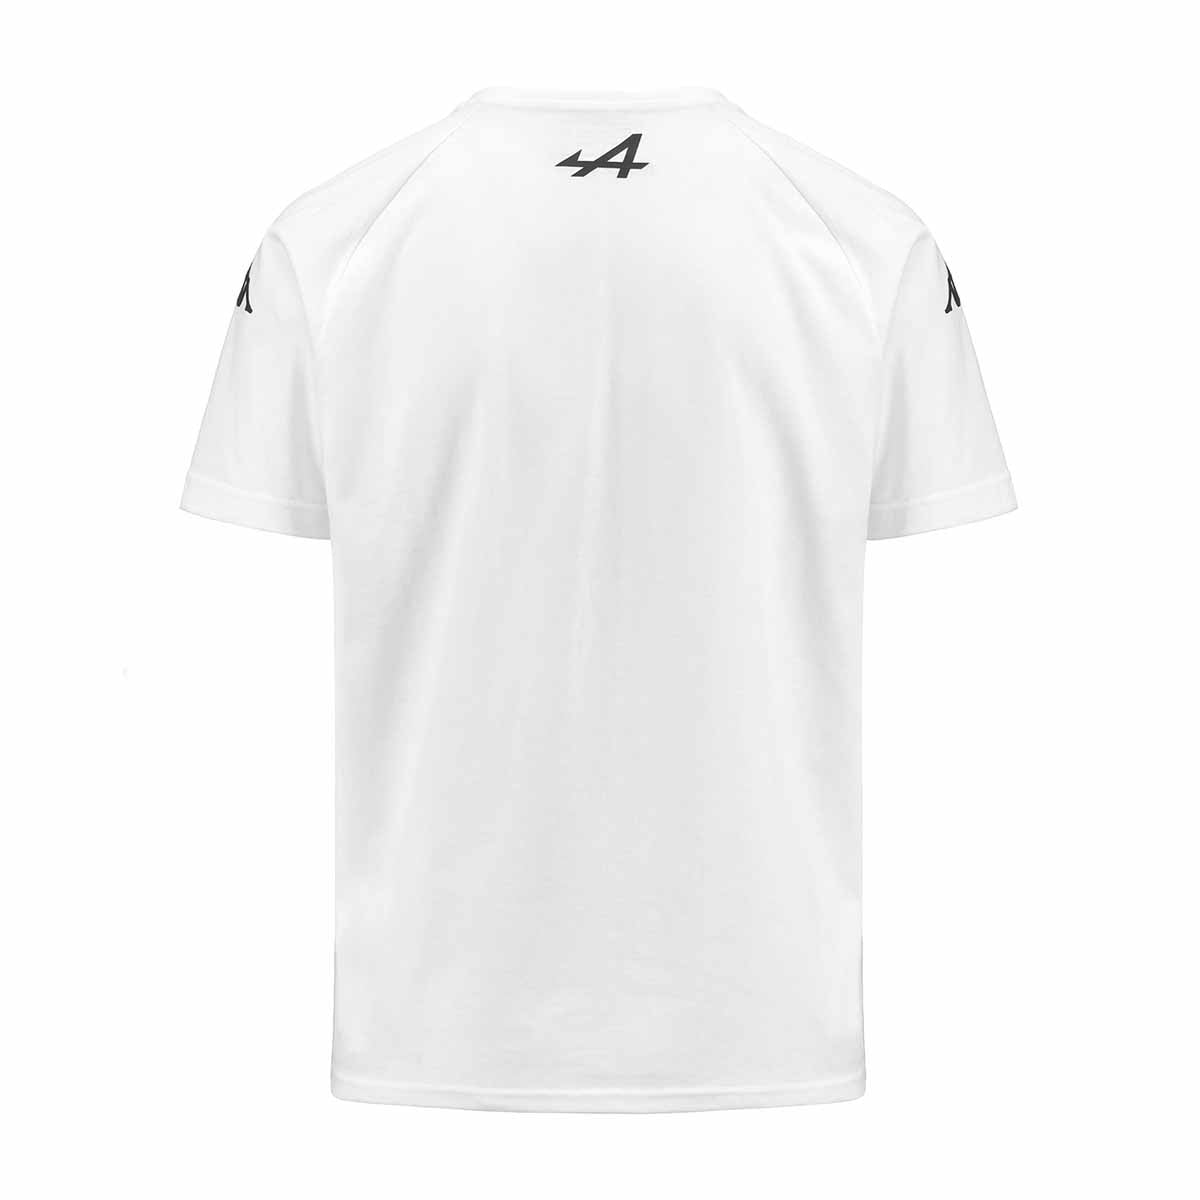 Camiseta Argla Alpine F1 Blanco Hombre